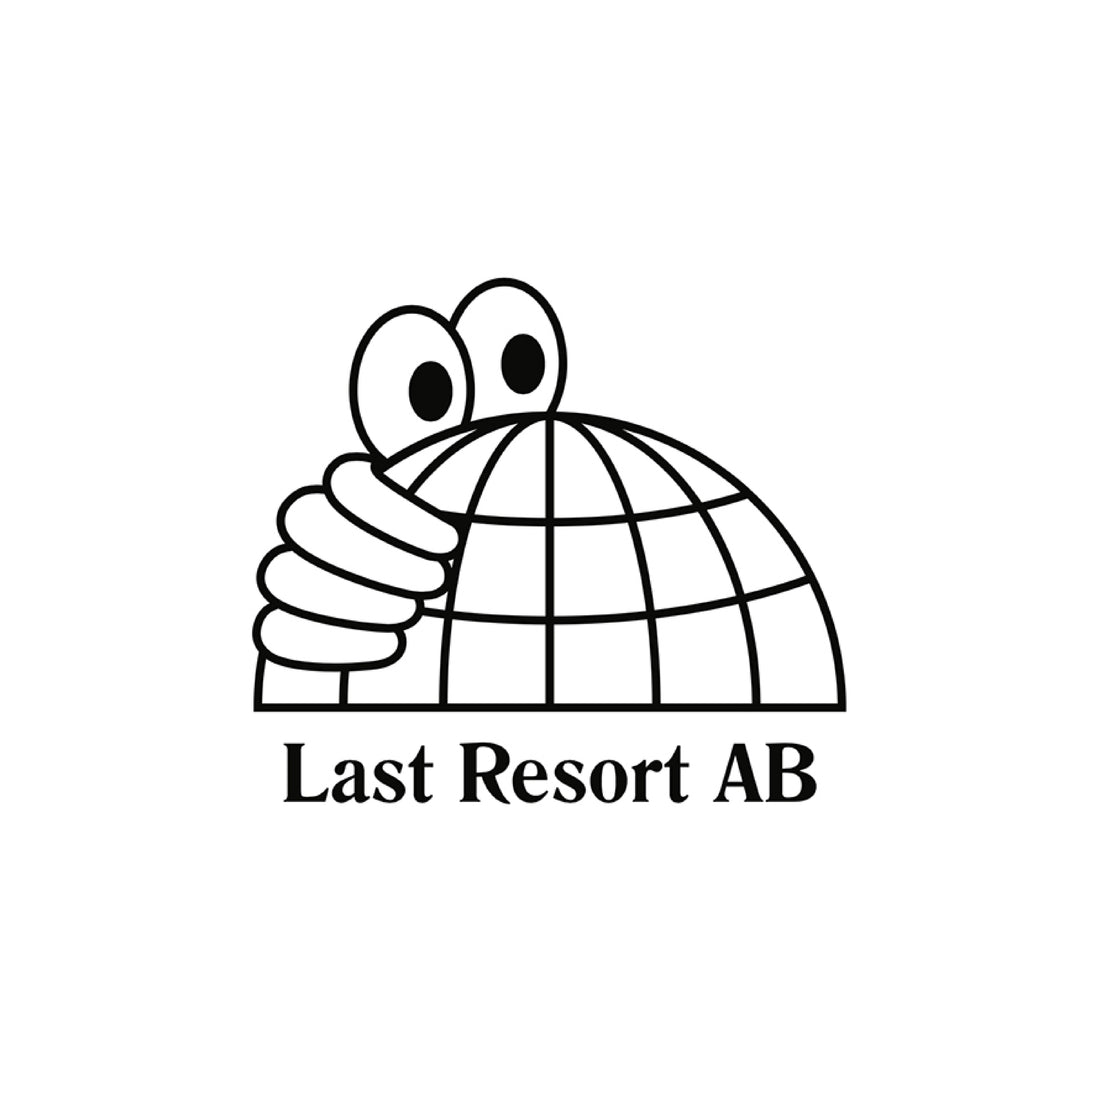  Last Resort AB